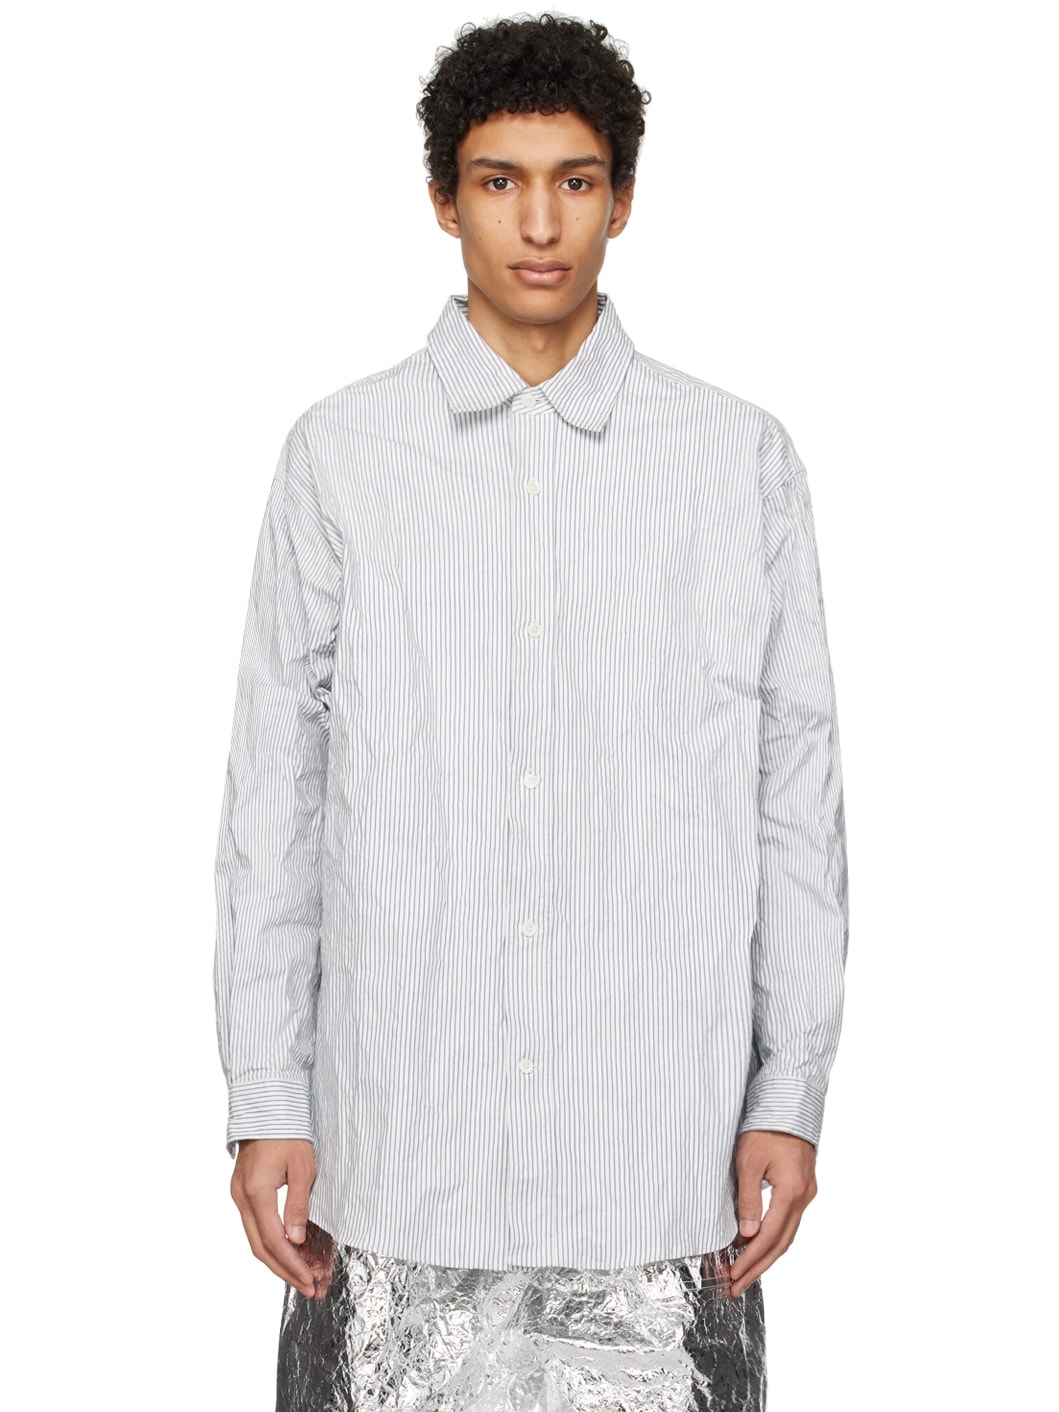 White & Navy Pinstripe Shirt - 1